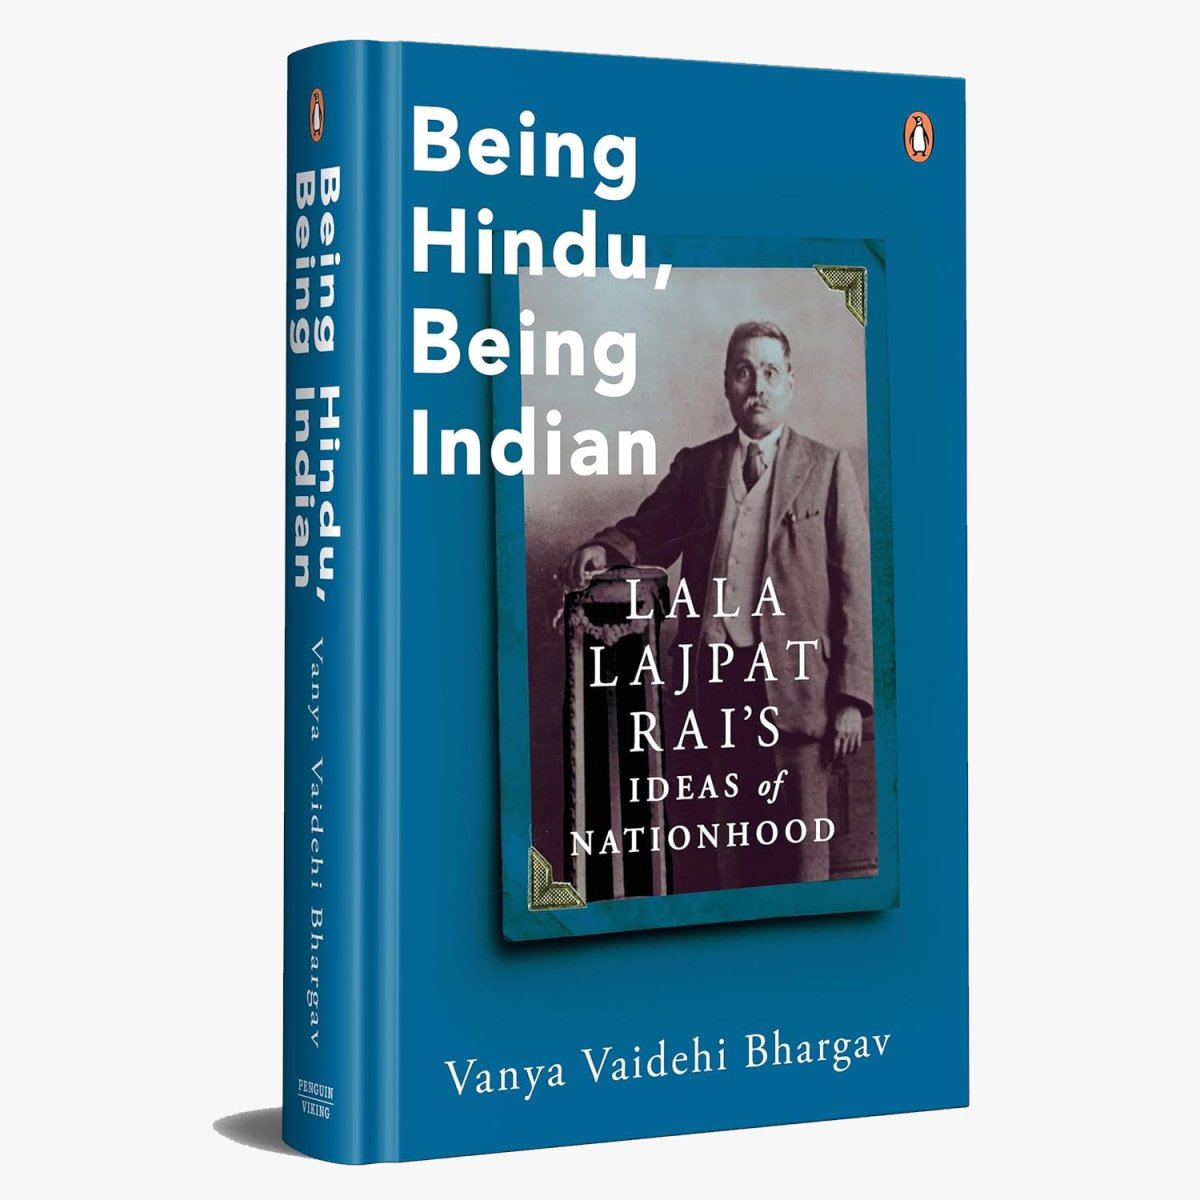 Being Hindu, Being Indian: An Excerpt